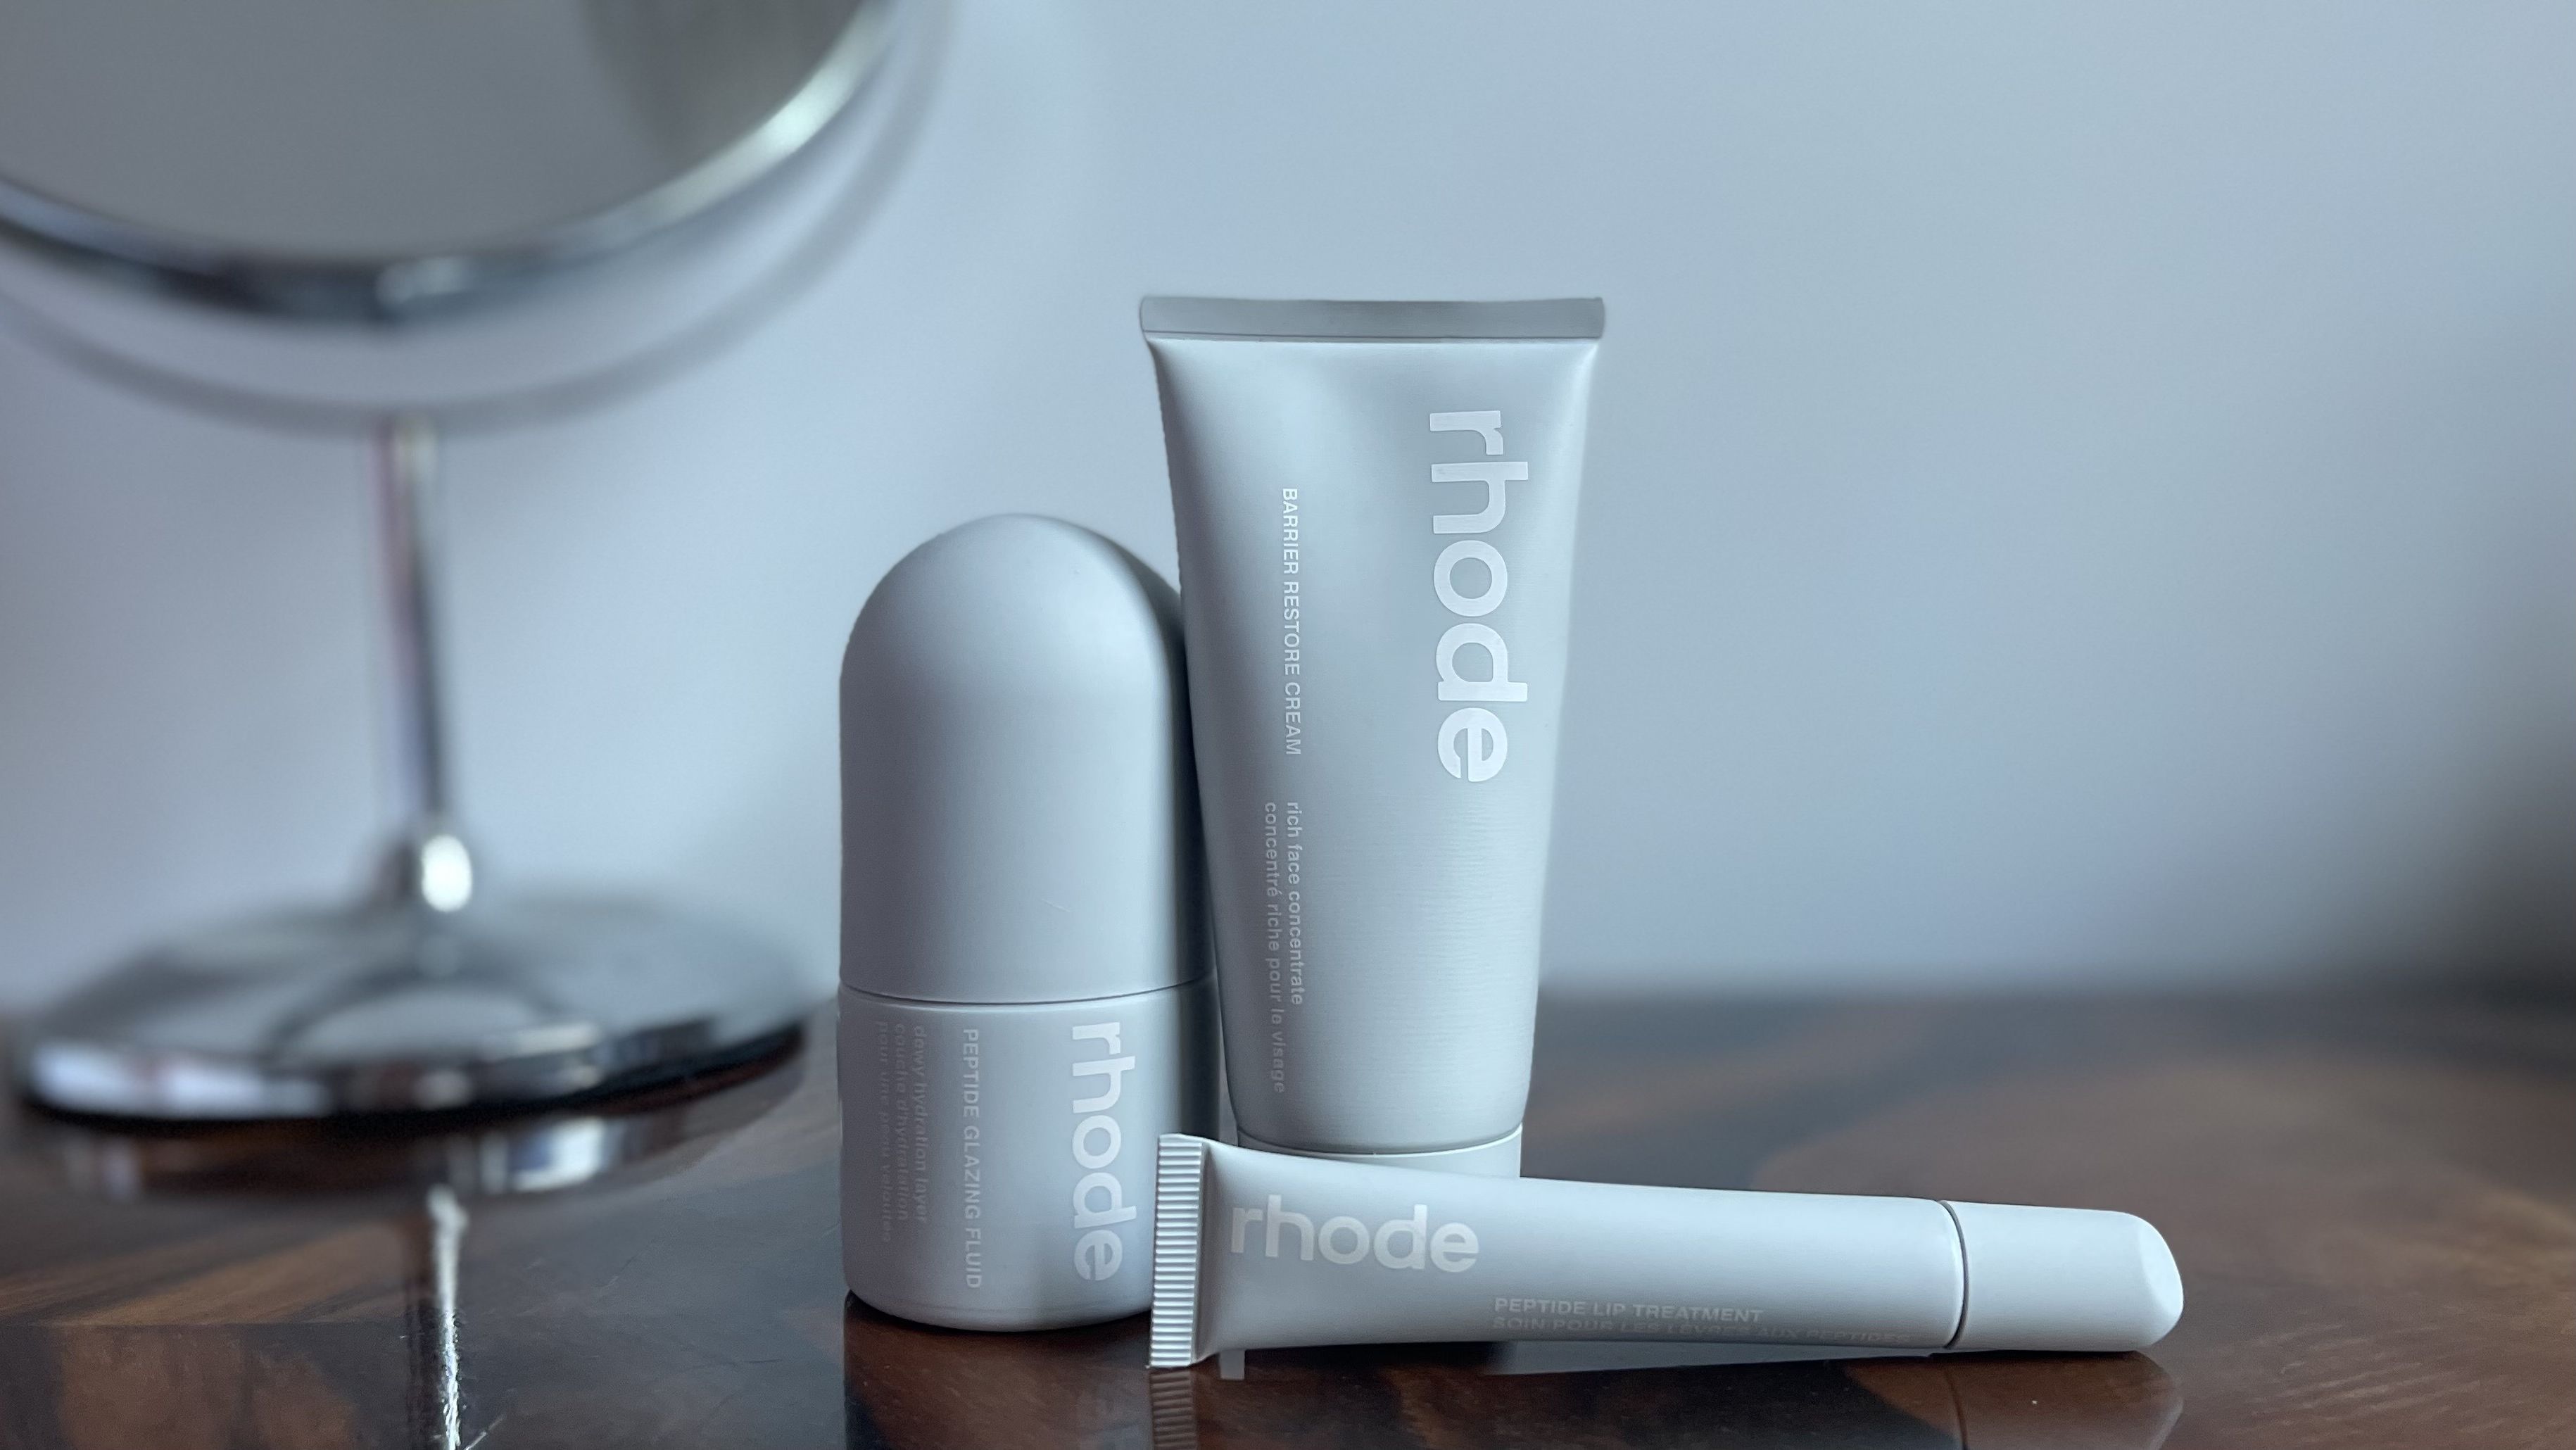 Rhode skin care by Hailey Bieber review: Lip treatments, creams